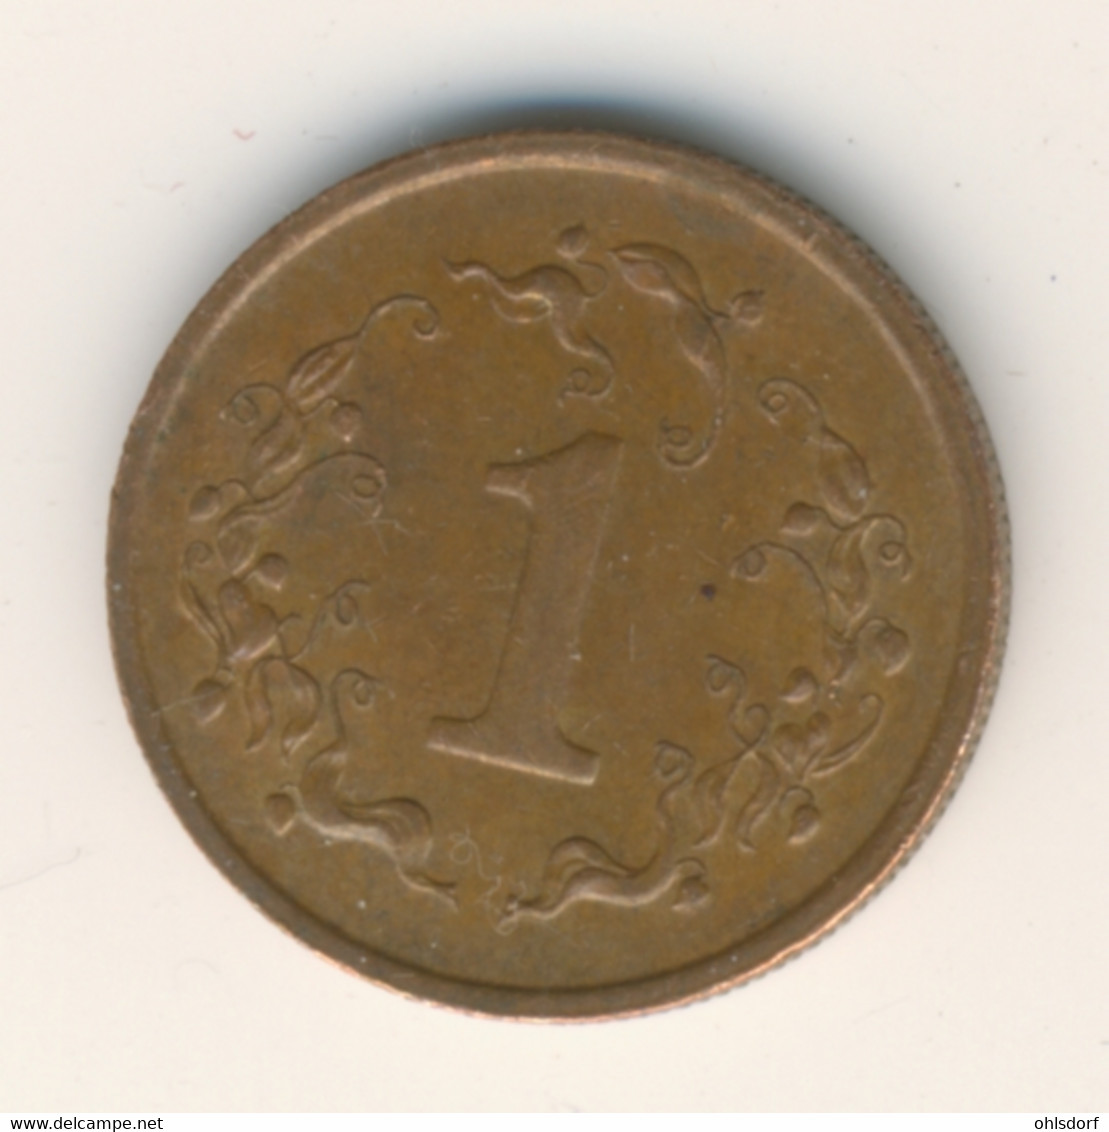 ZIMBABWE 1988: 1 Cent, KM 1 - Zimbabwe